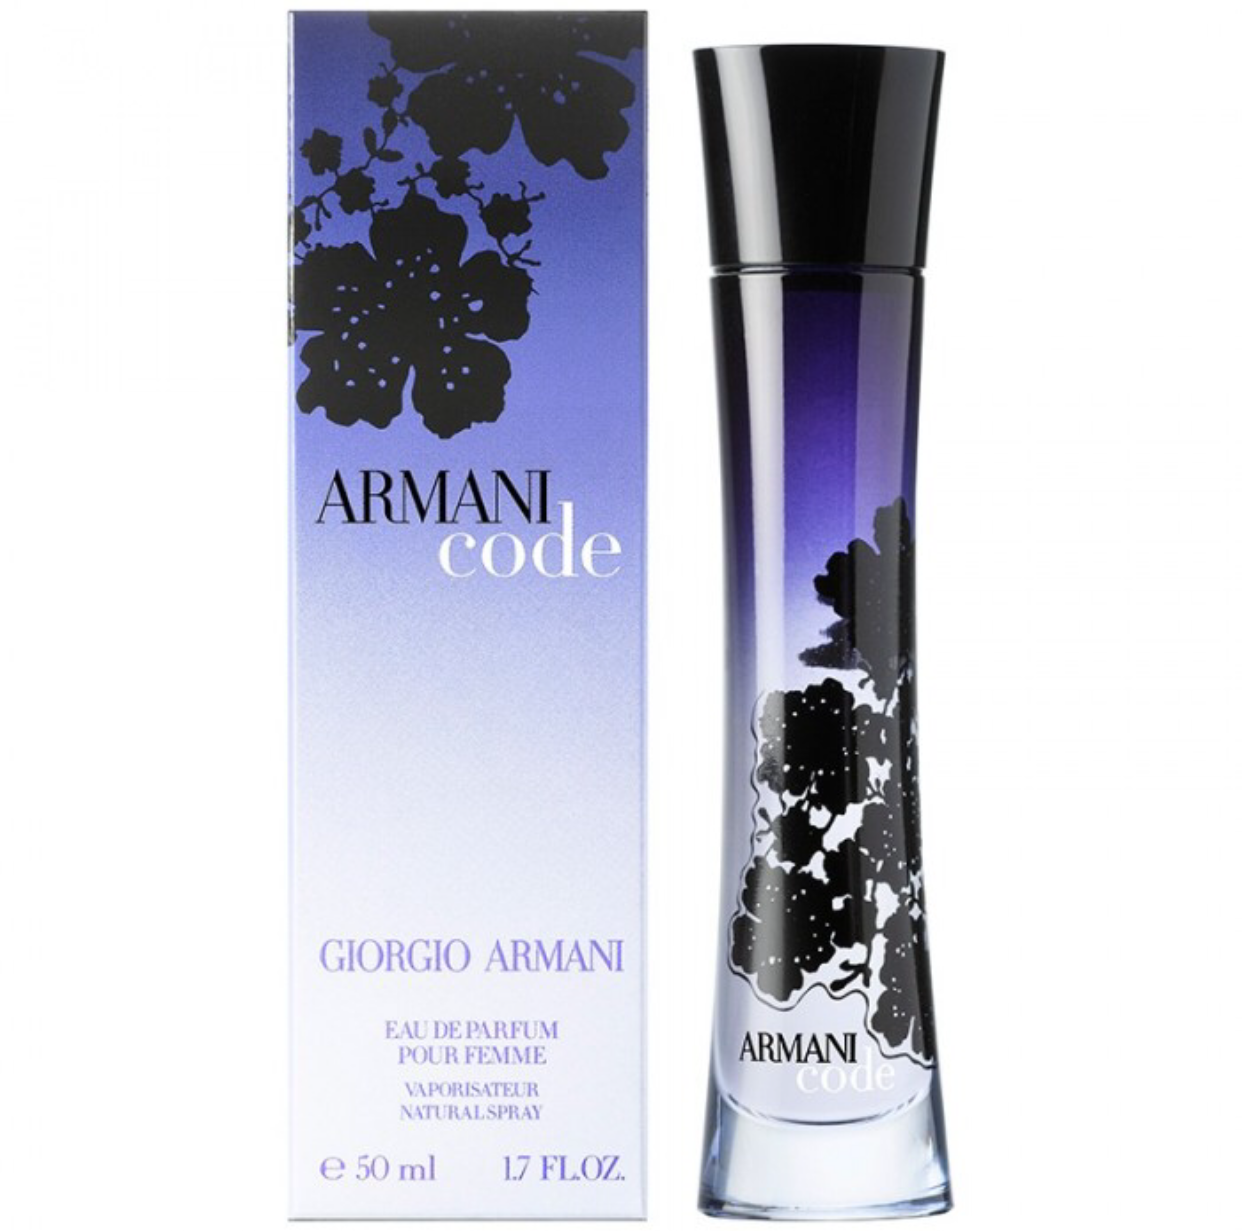 armani code box set